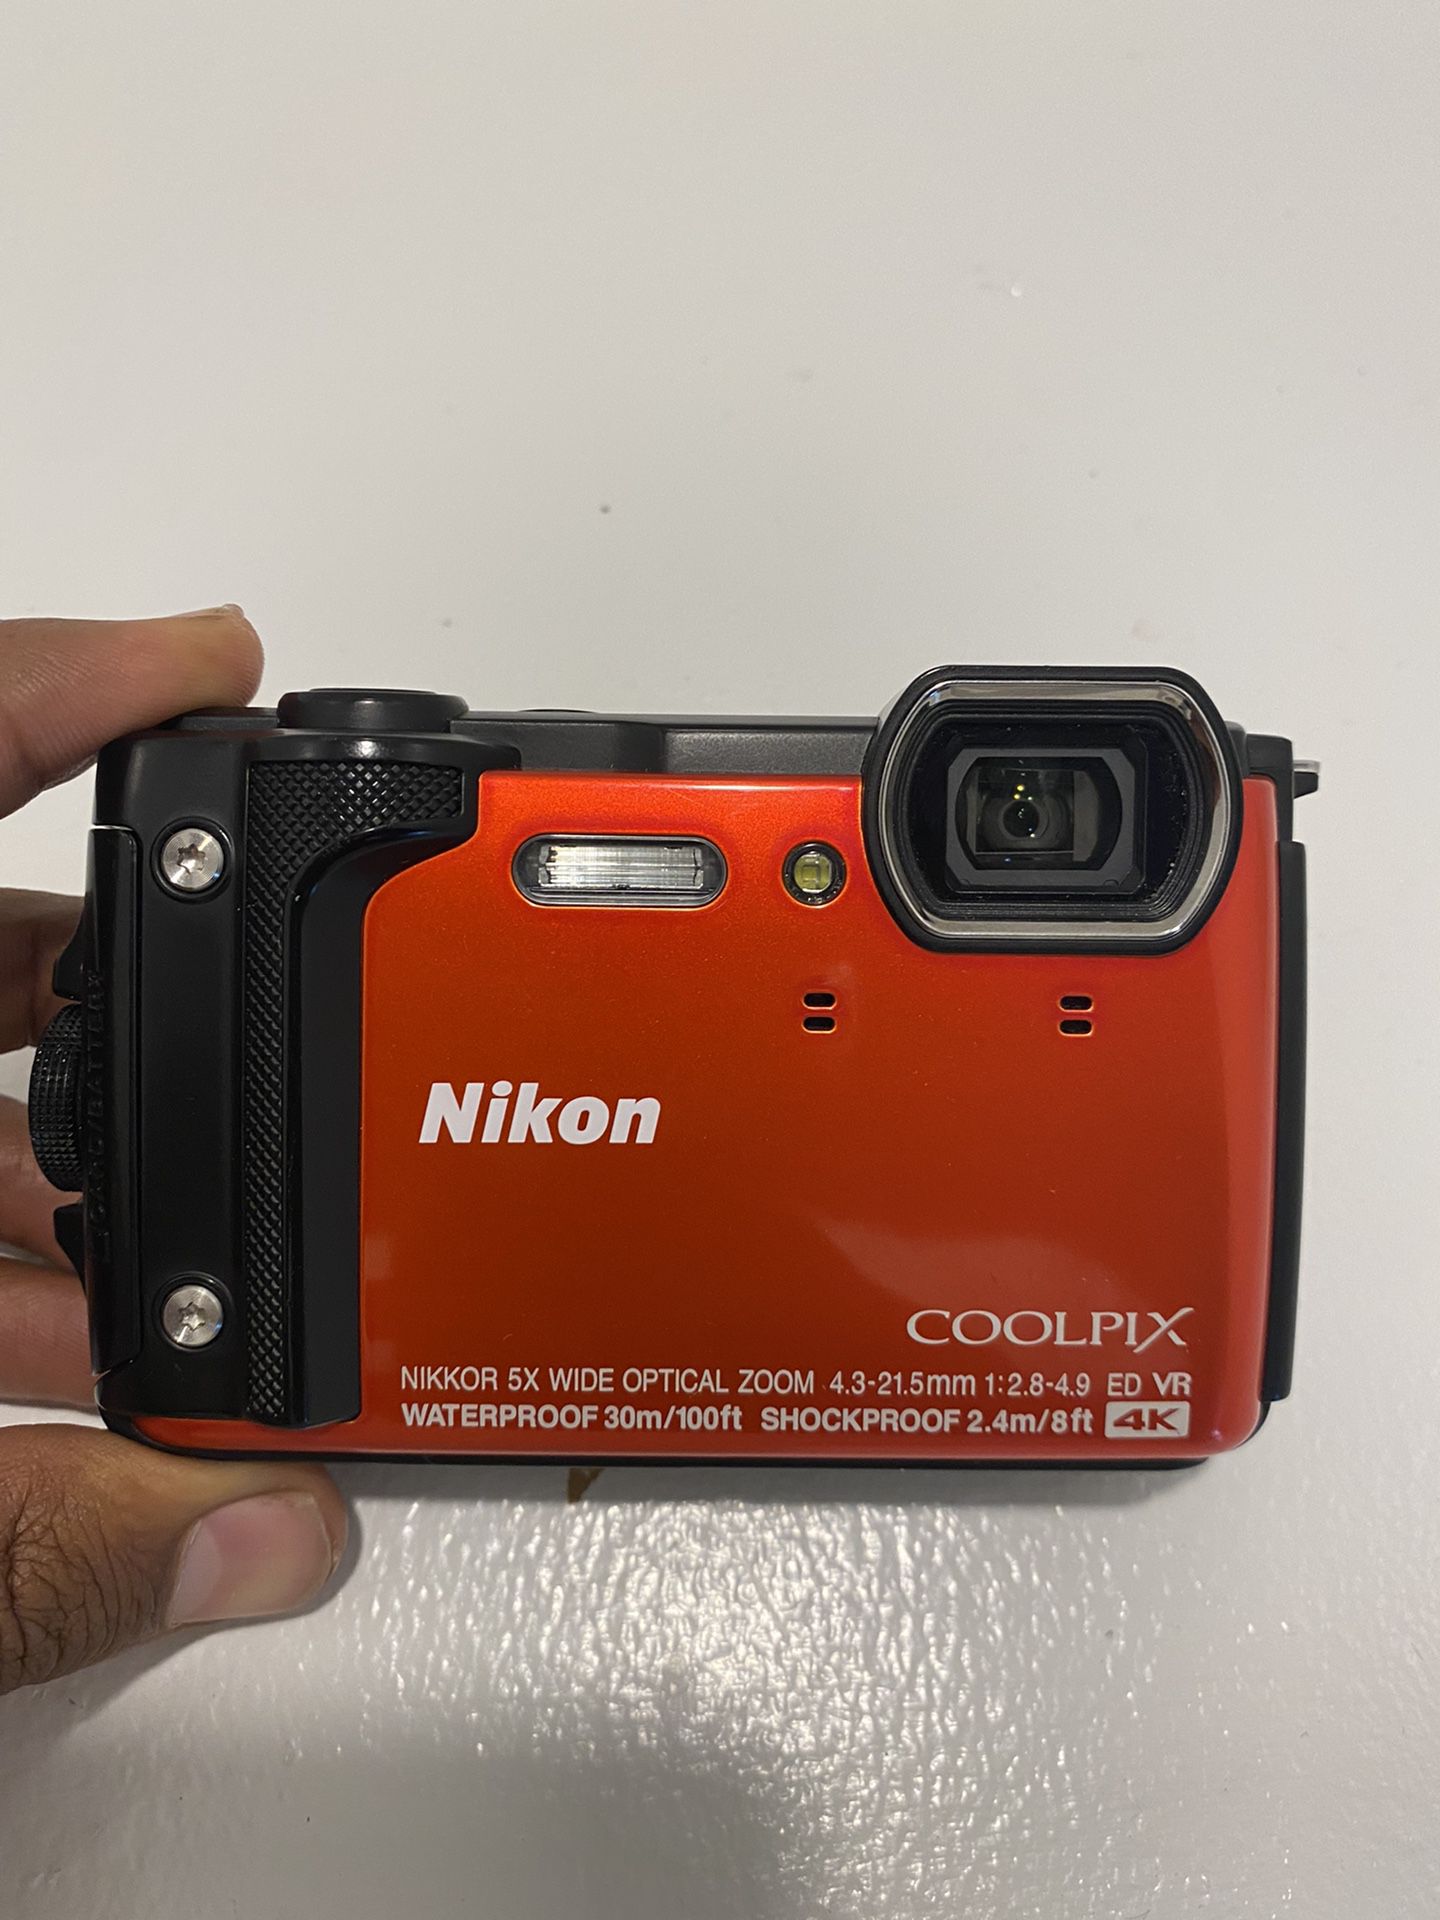 Nikon Coolpix W300 Digital Camera for Sale in Decatur, GA - OfferUp